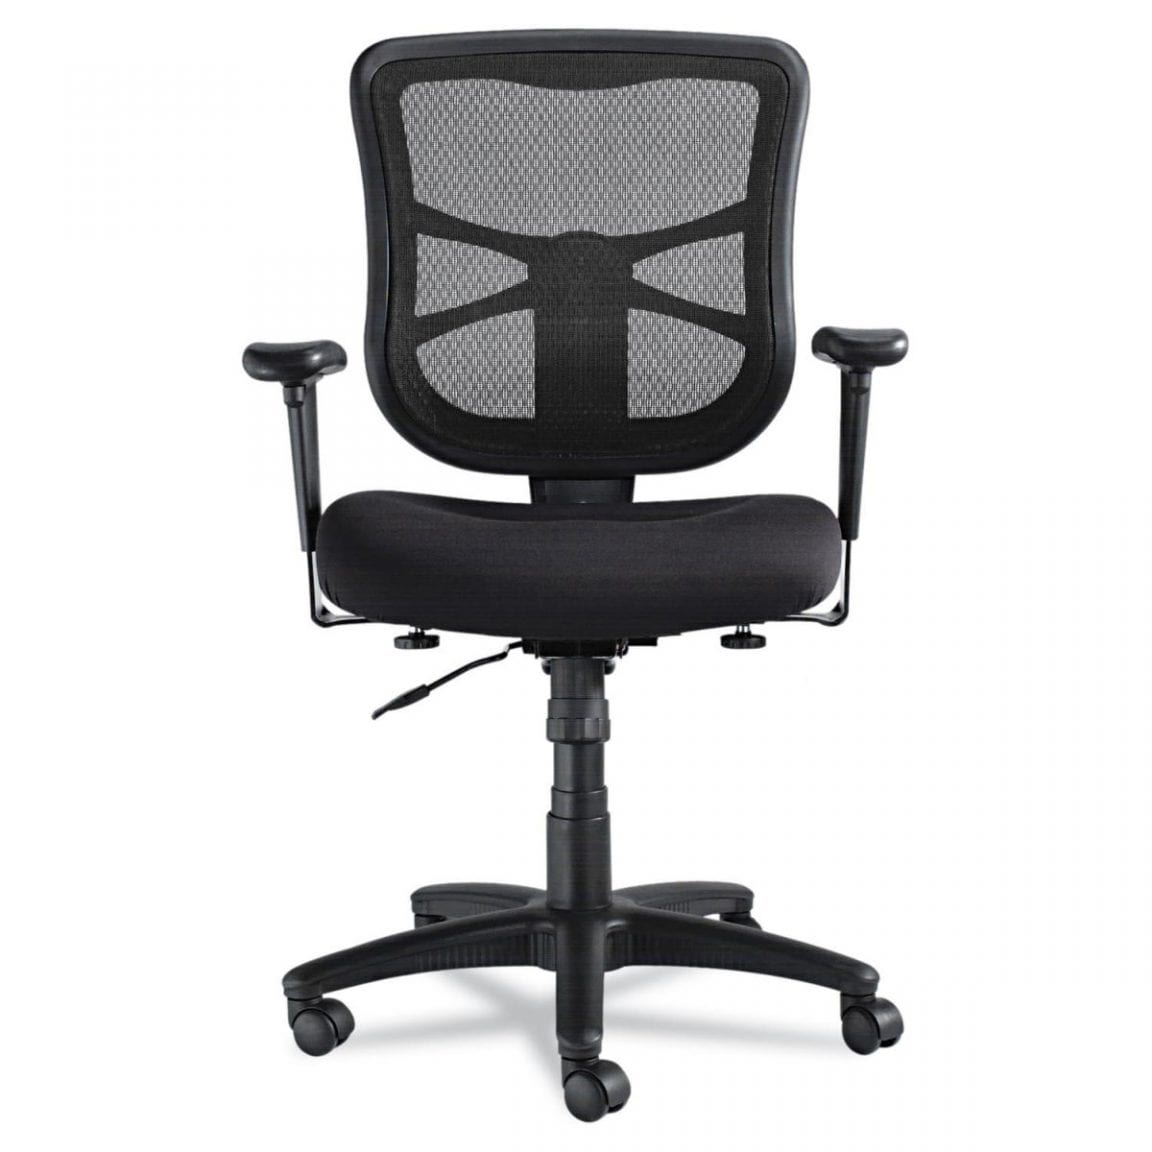 Alera Elusion Series Mid-Back Mesh Swivel Tilt Chair $114.98 (30% off